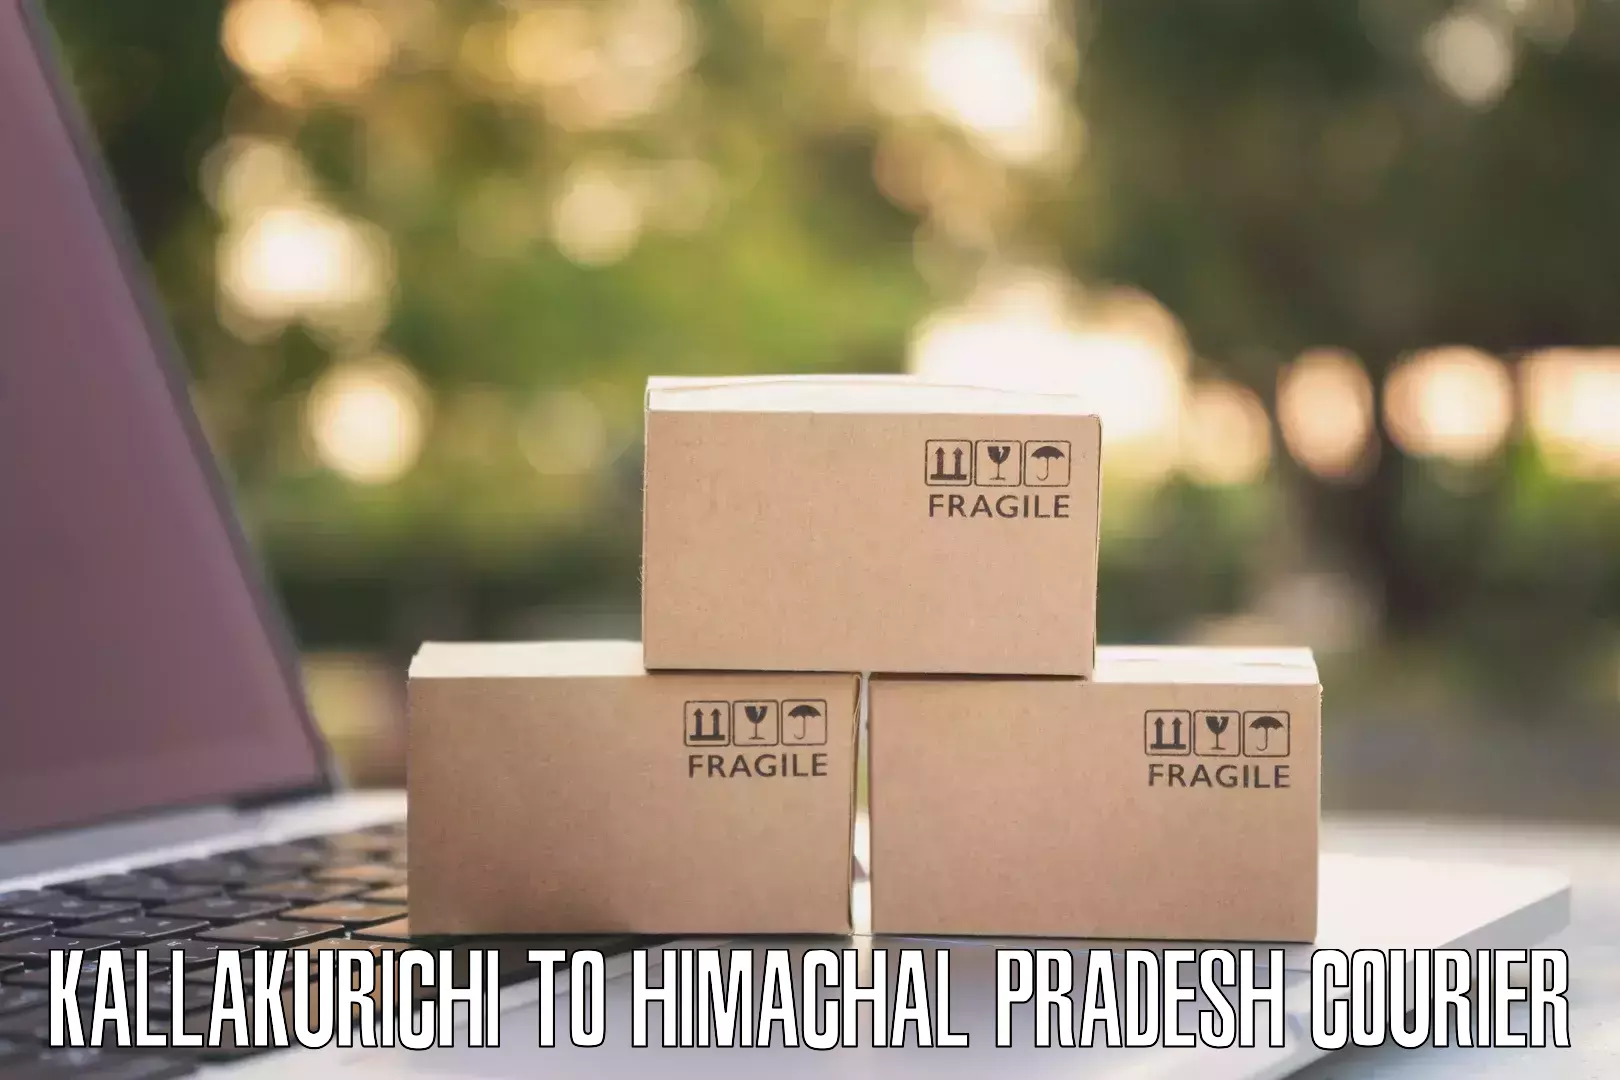 Reliable package handling Kallakurichi to Kachhera